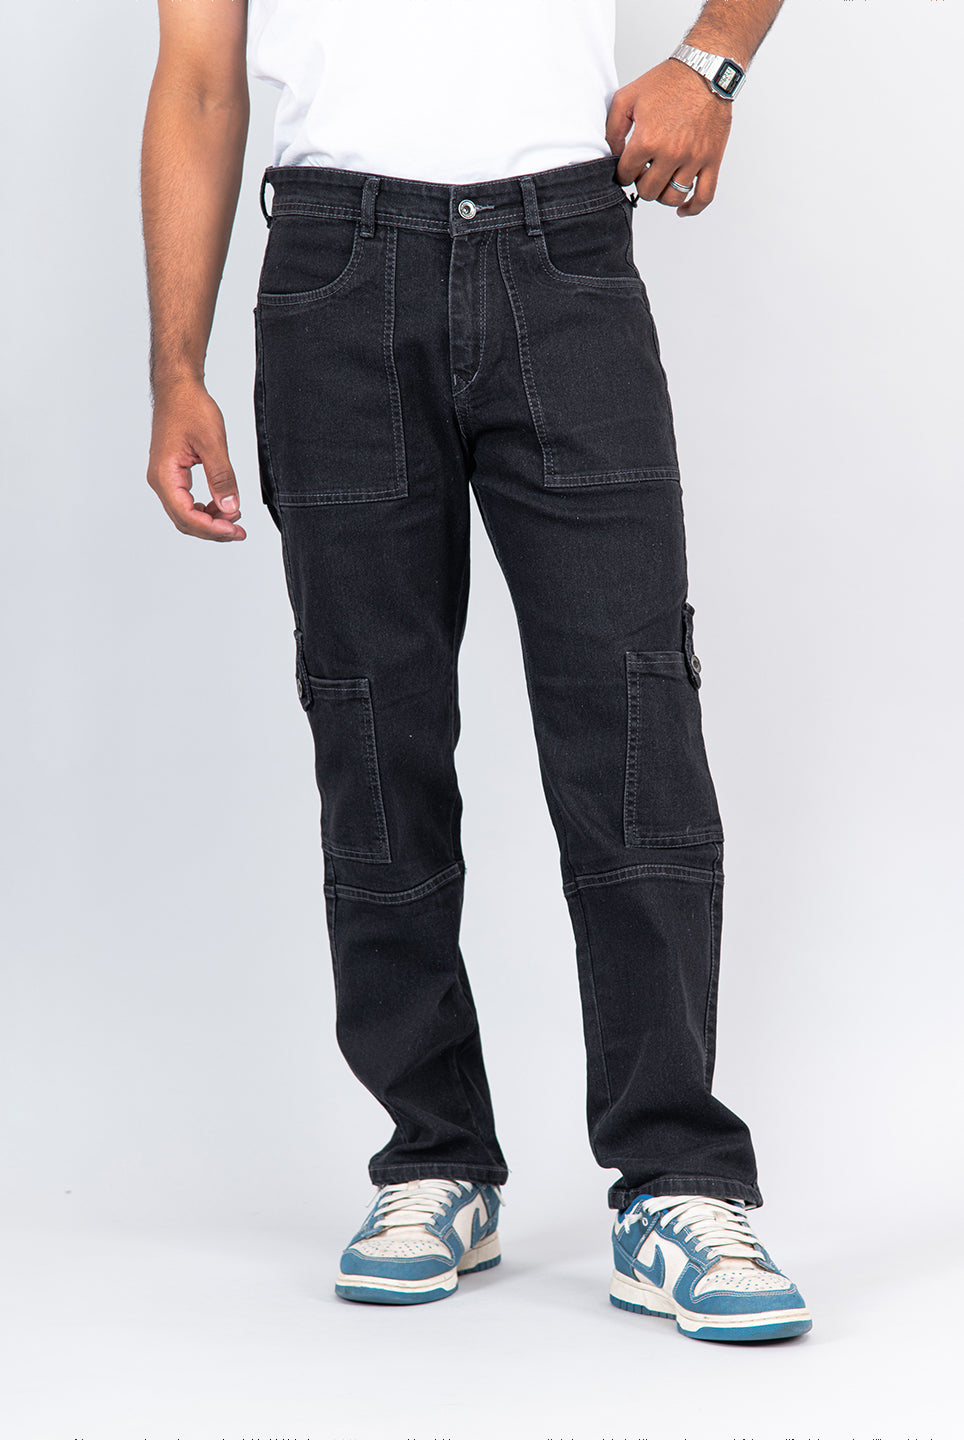 carbon black comfort fit cargo denim jeans